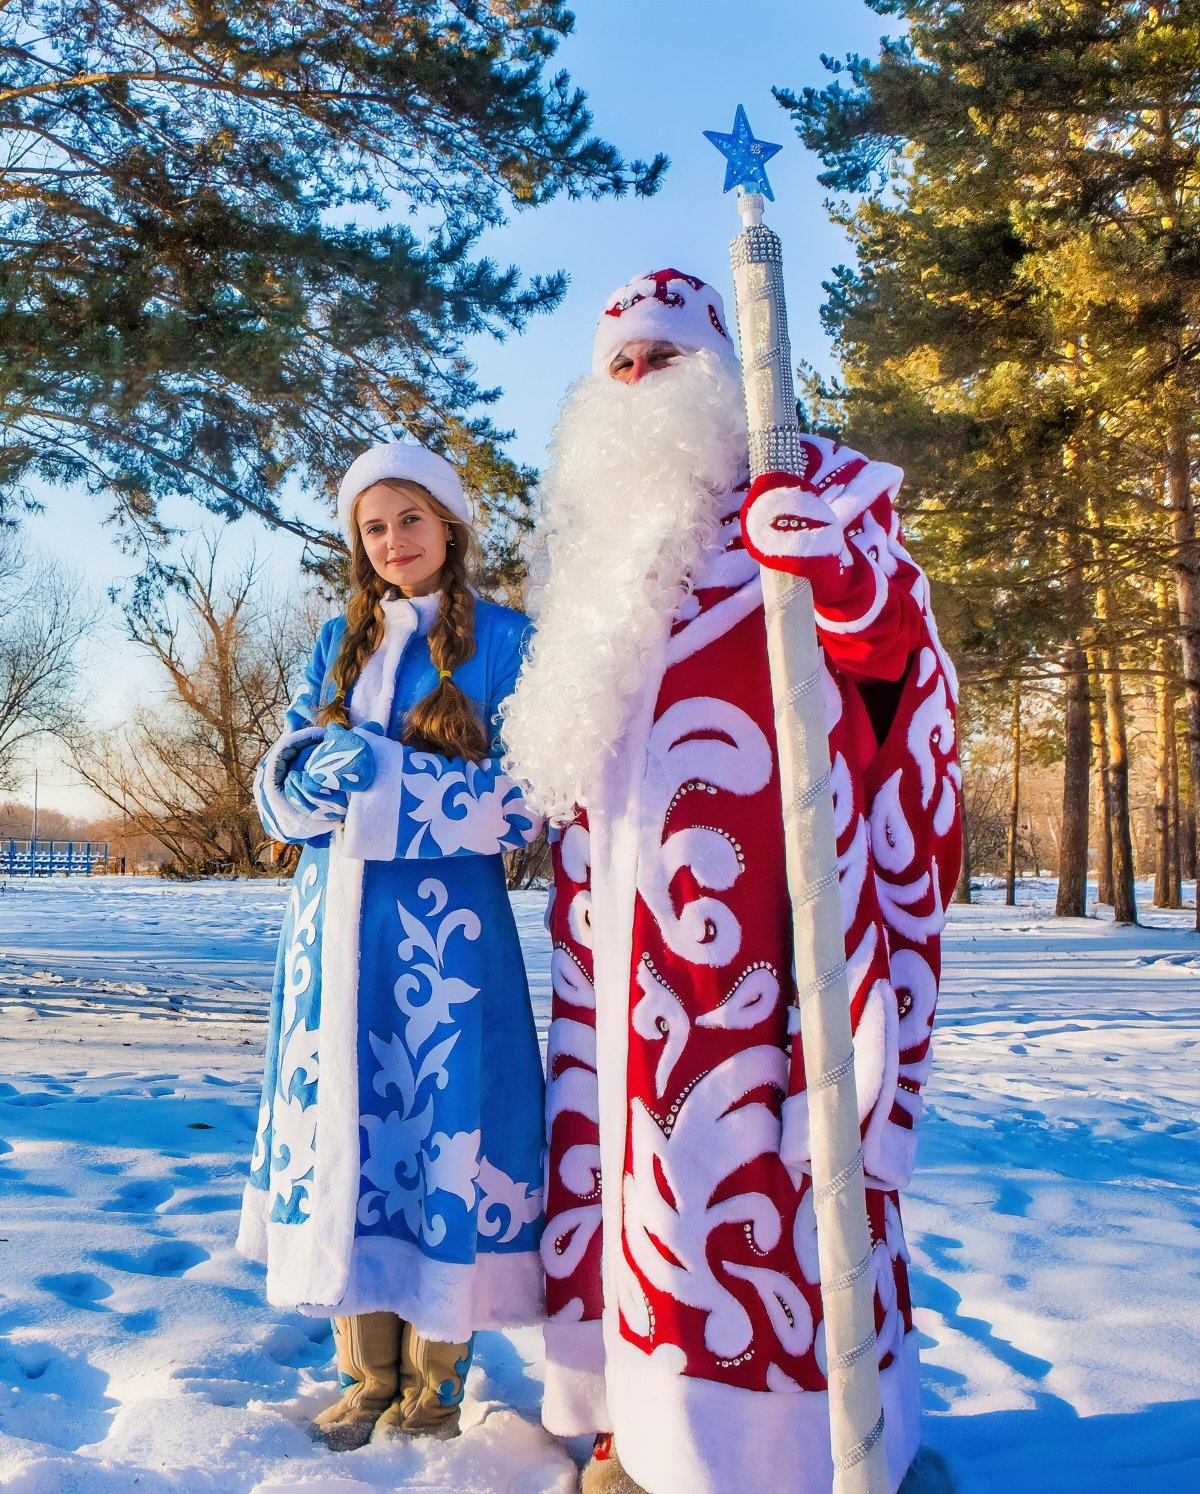 Russian Orthodox Christmas and Sviatki Traditions, InfoMistico.com